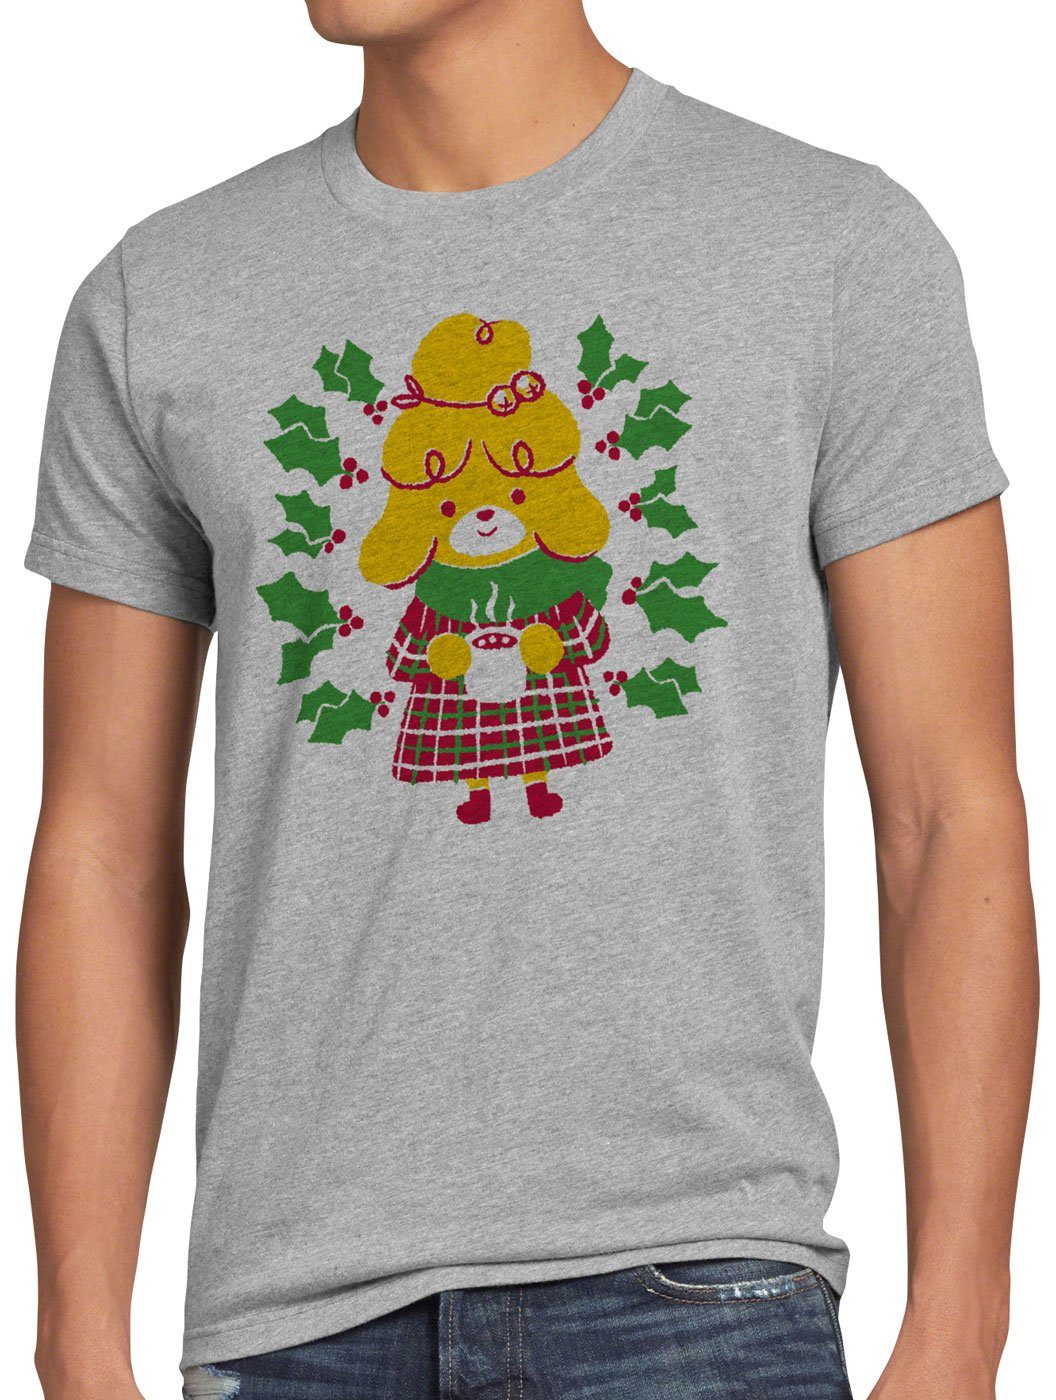 style3 Print-Shirt Herren T-Shirt Crossing Christmas Sweater switch ugly pulli weihnachtspullover grau meliert